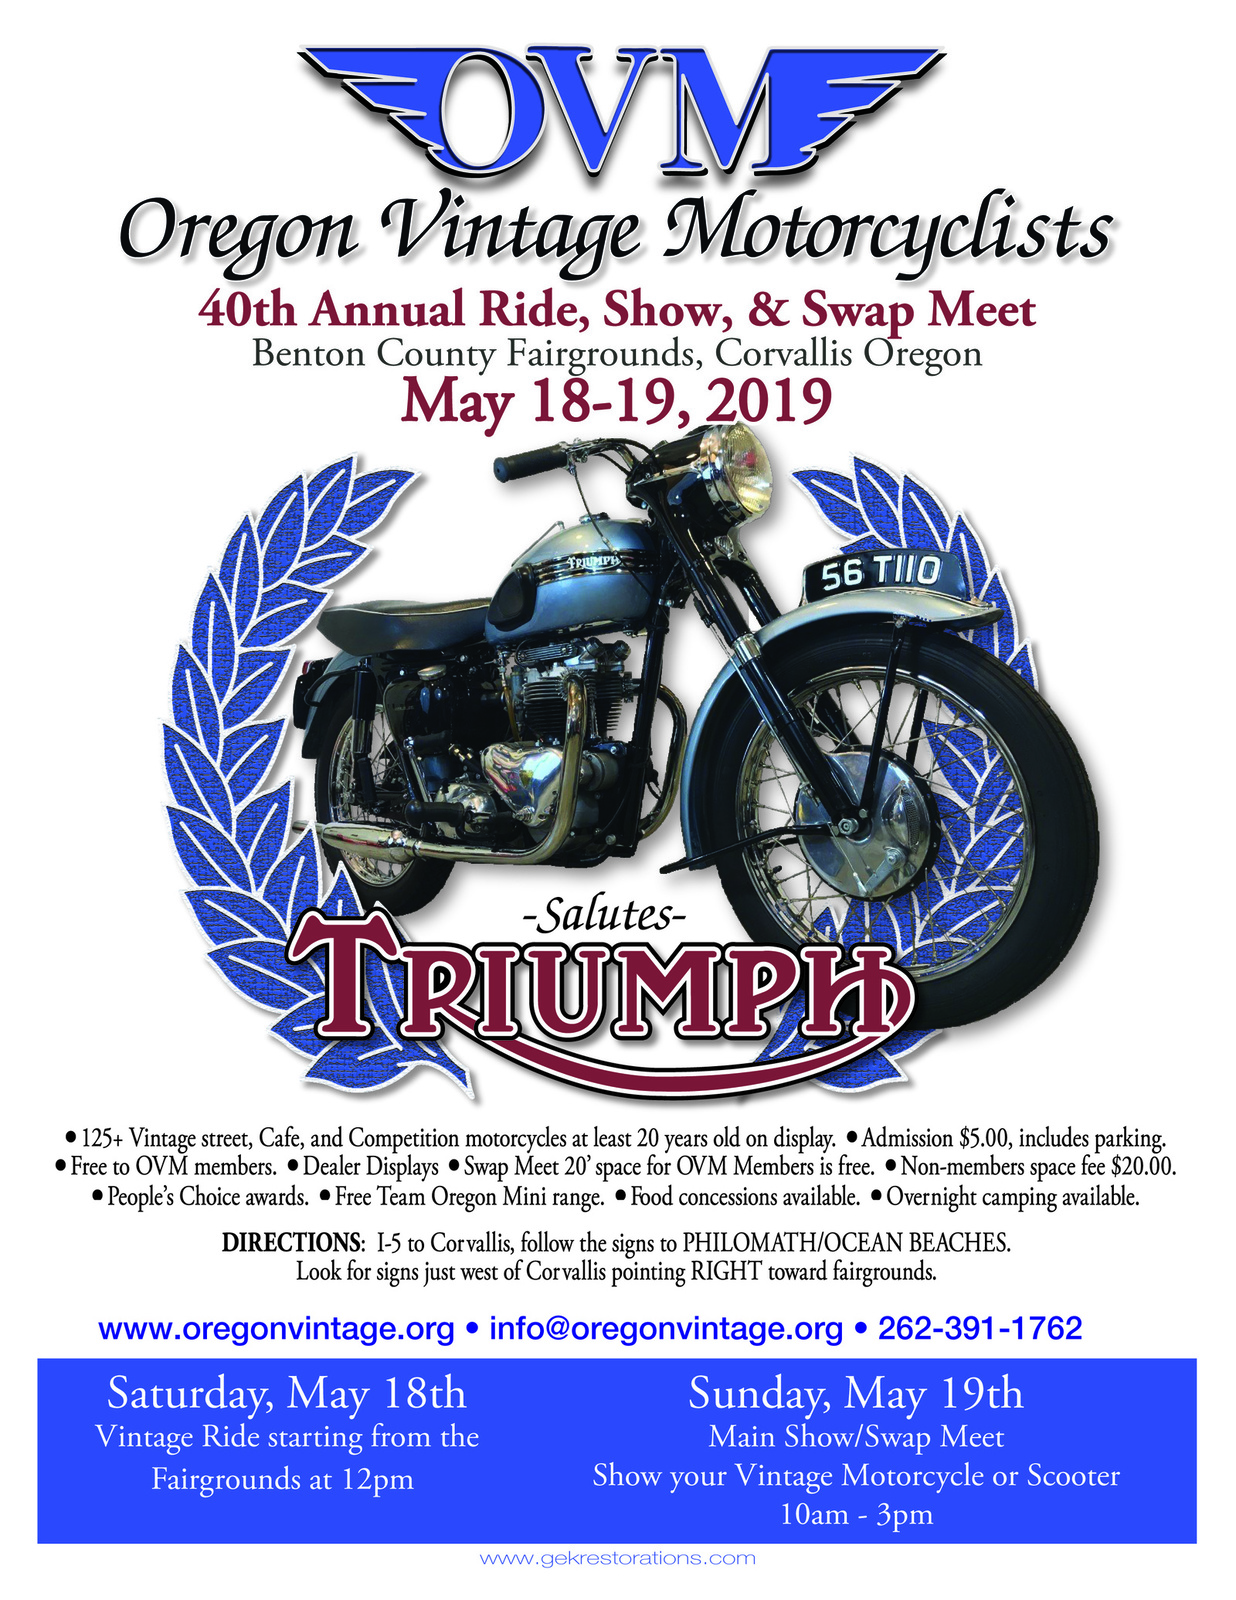 Oregon Vintage Motorcyclist 2019 Corvallis Show May 18-19th